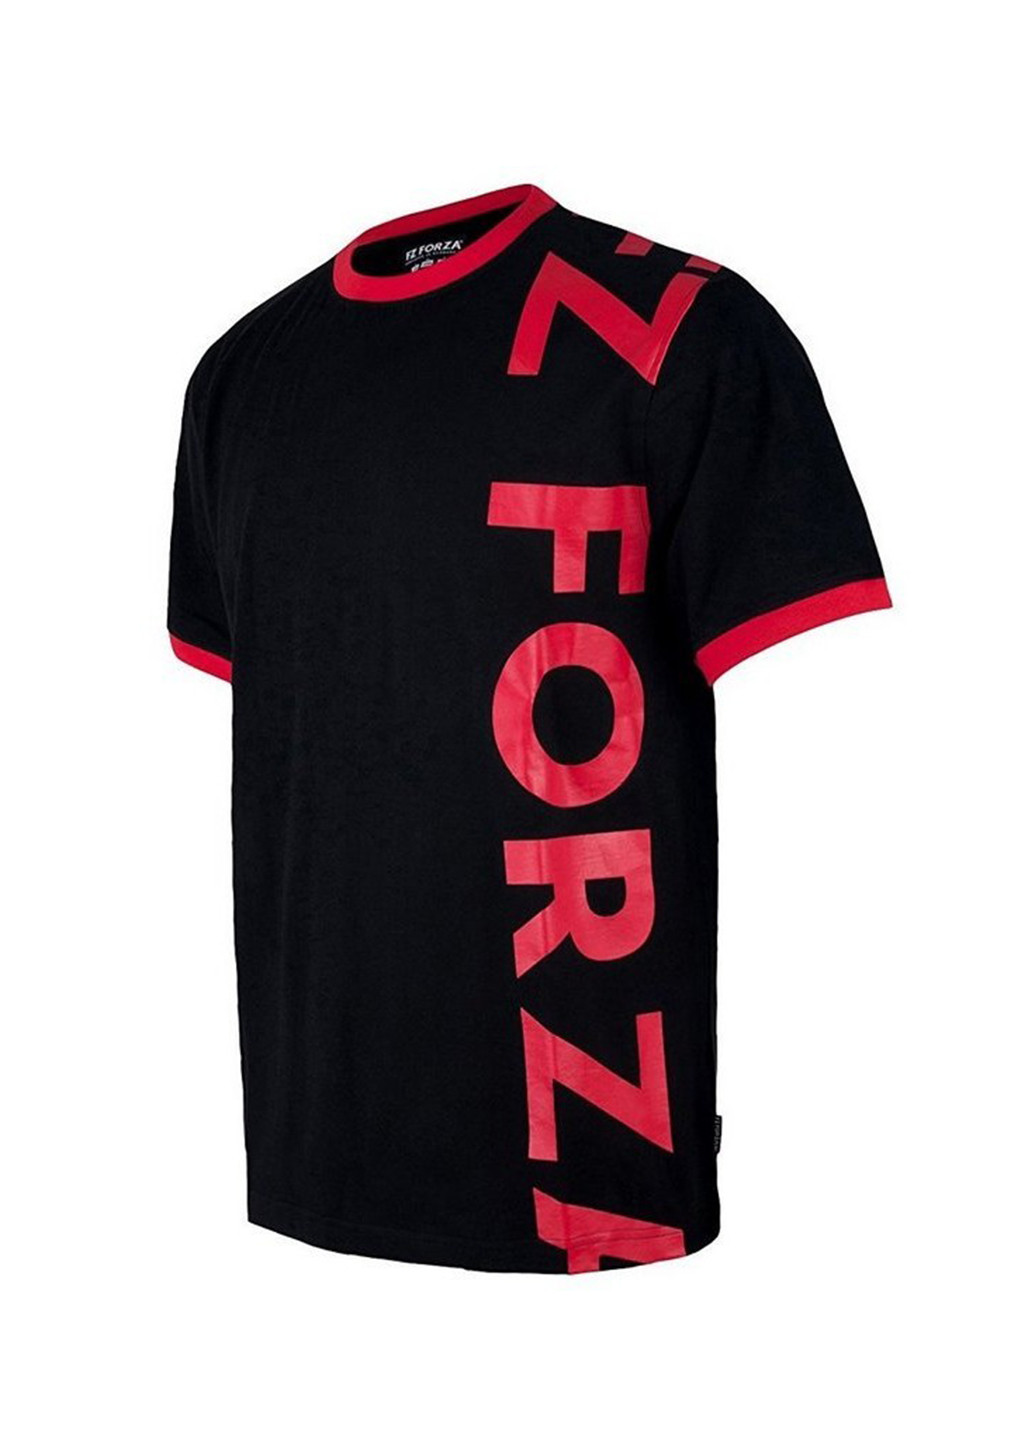 Красная летняя футболка с коротким рукавом FZ Forza